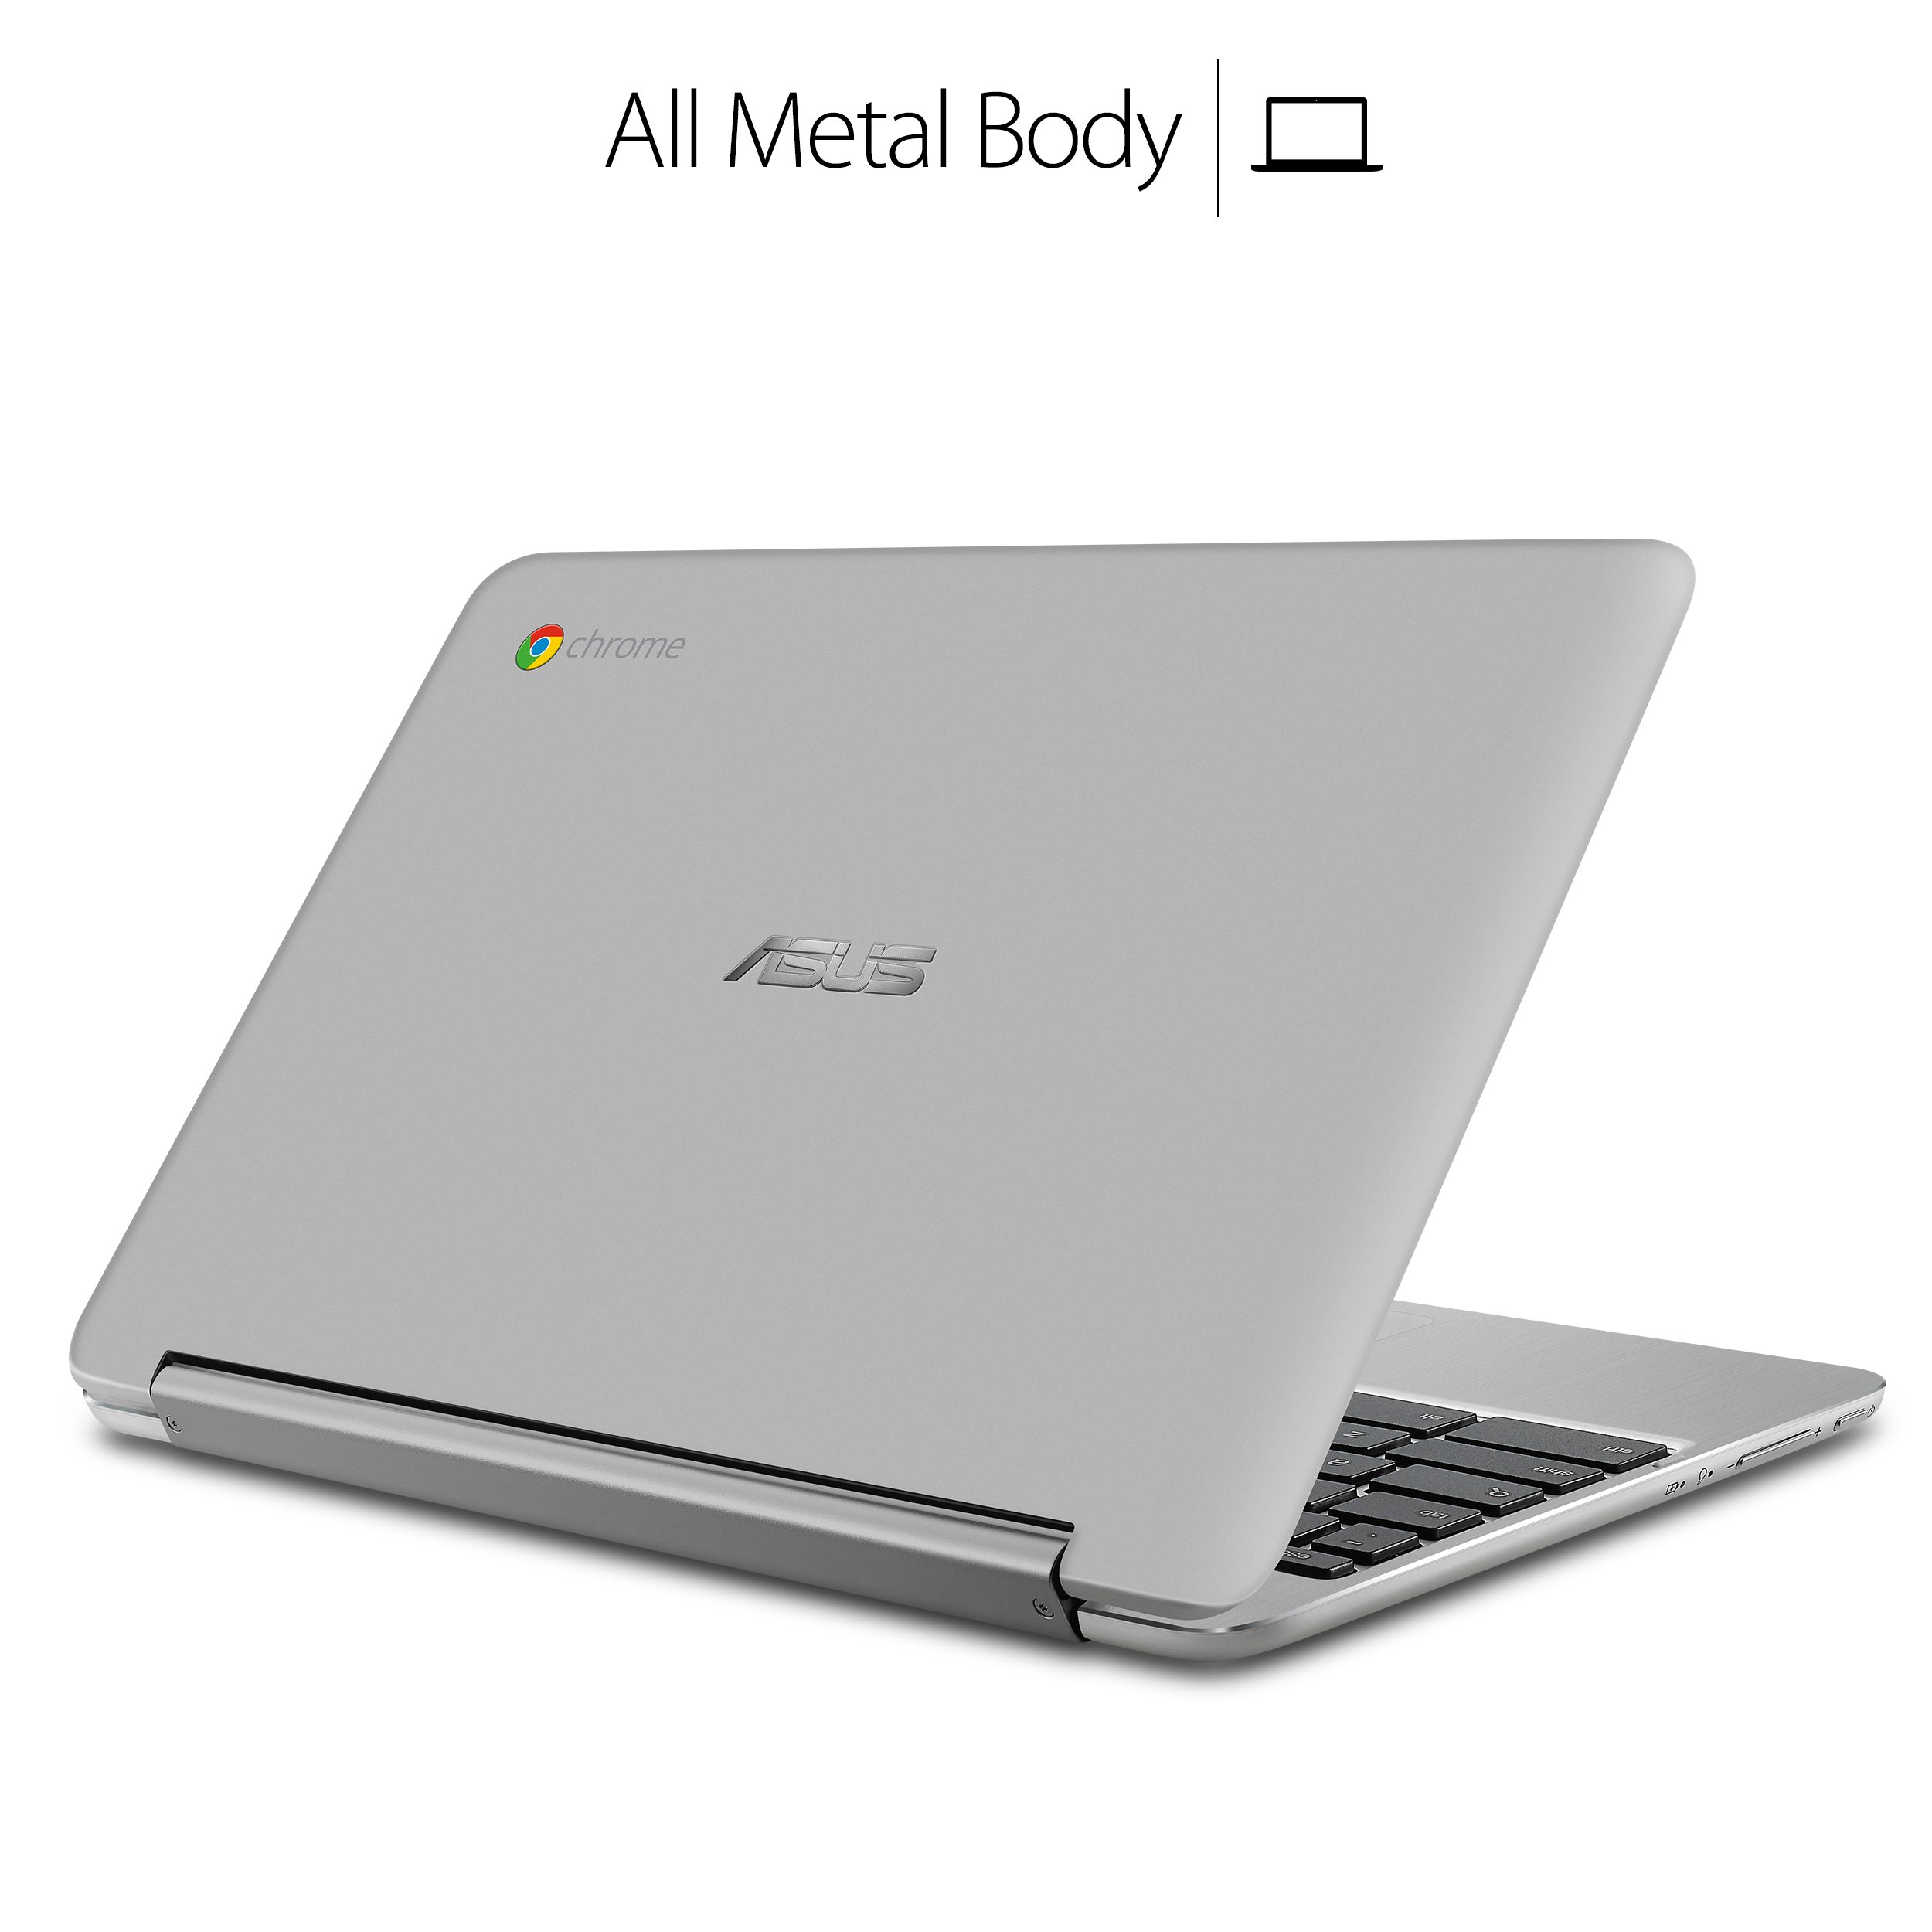 ASUS Chromebook Flip C101 2-In-1 Laptop- 10.1” 4-Way WXGA Touchscreen, Rockchip RK3399 Quad-Core Processor, 4GB RAM, 16GB Storage, All Metal Body, Lightweight, USB Type-C, Chrome OS- C101PA-DB02